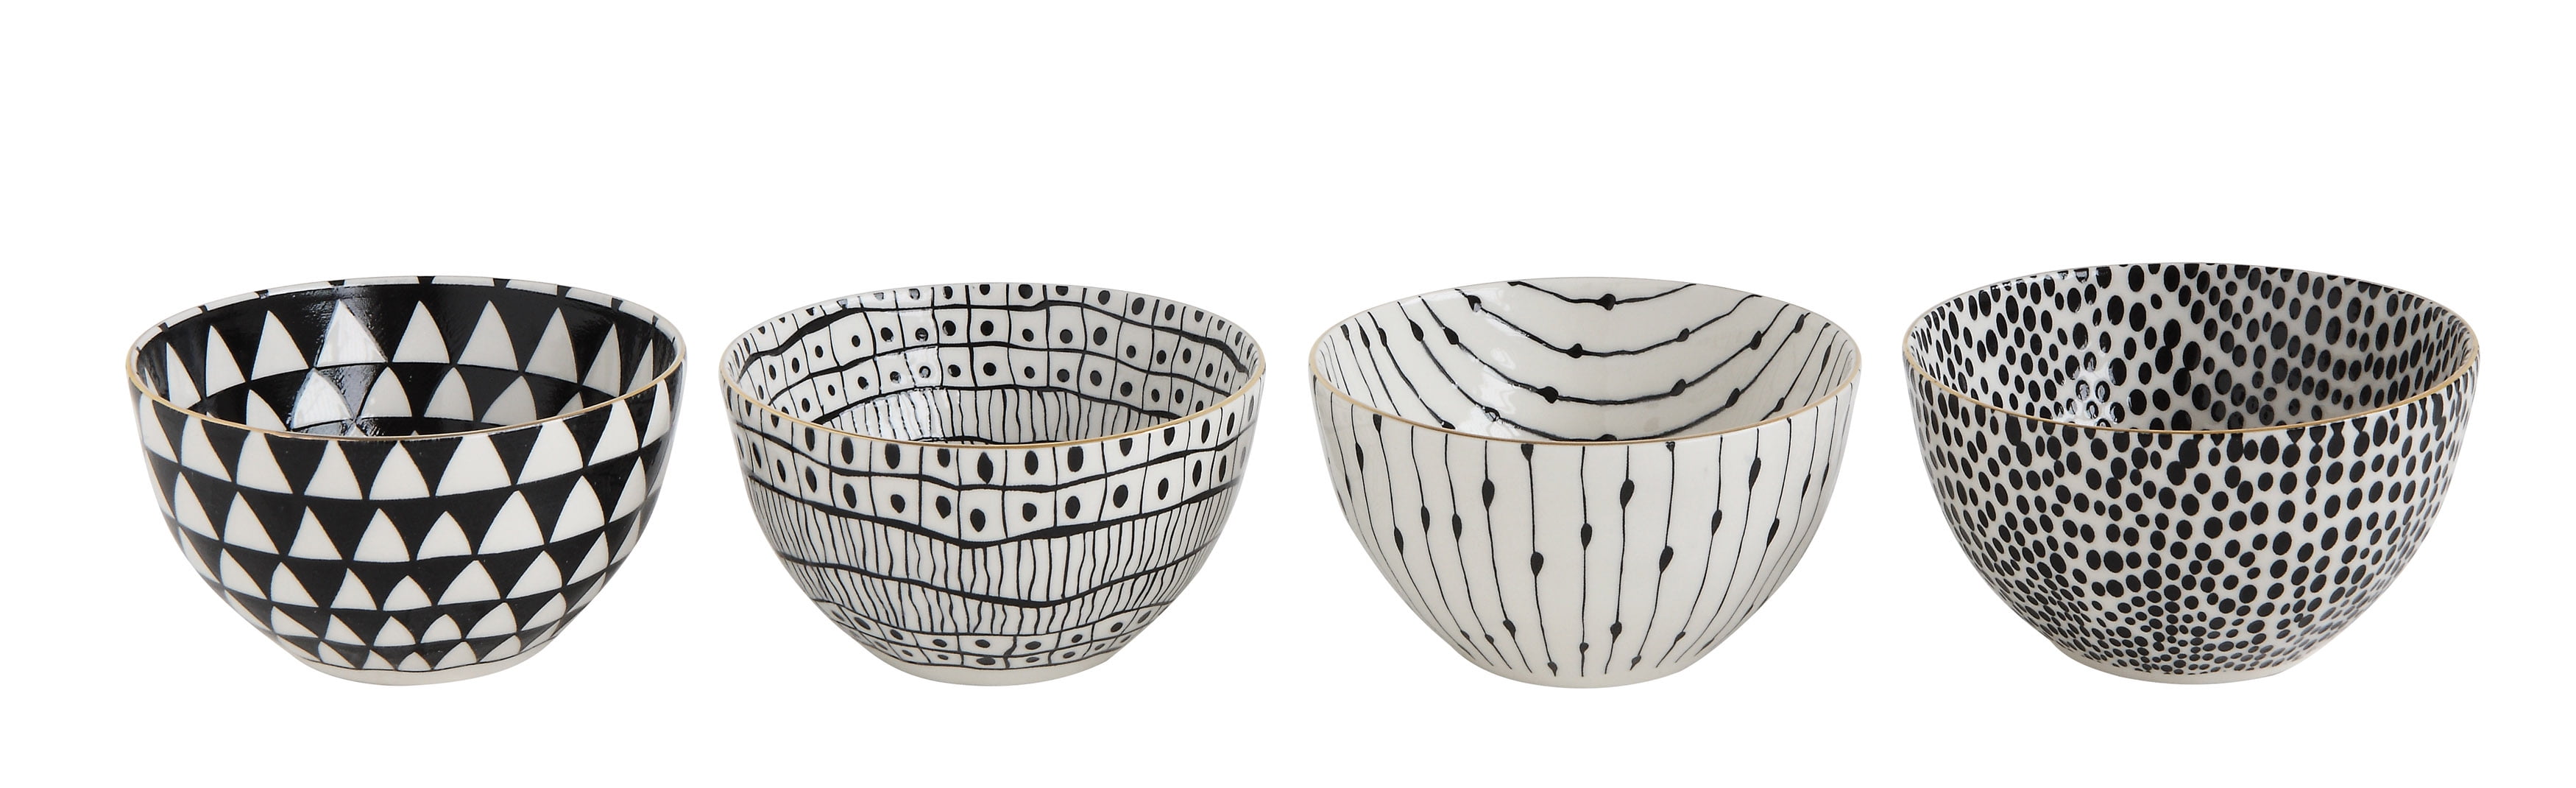 Zebra Pattern Decorative Bowl Spheres Stunning Design Home Display Quality Black 